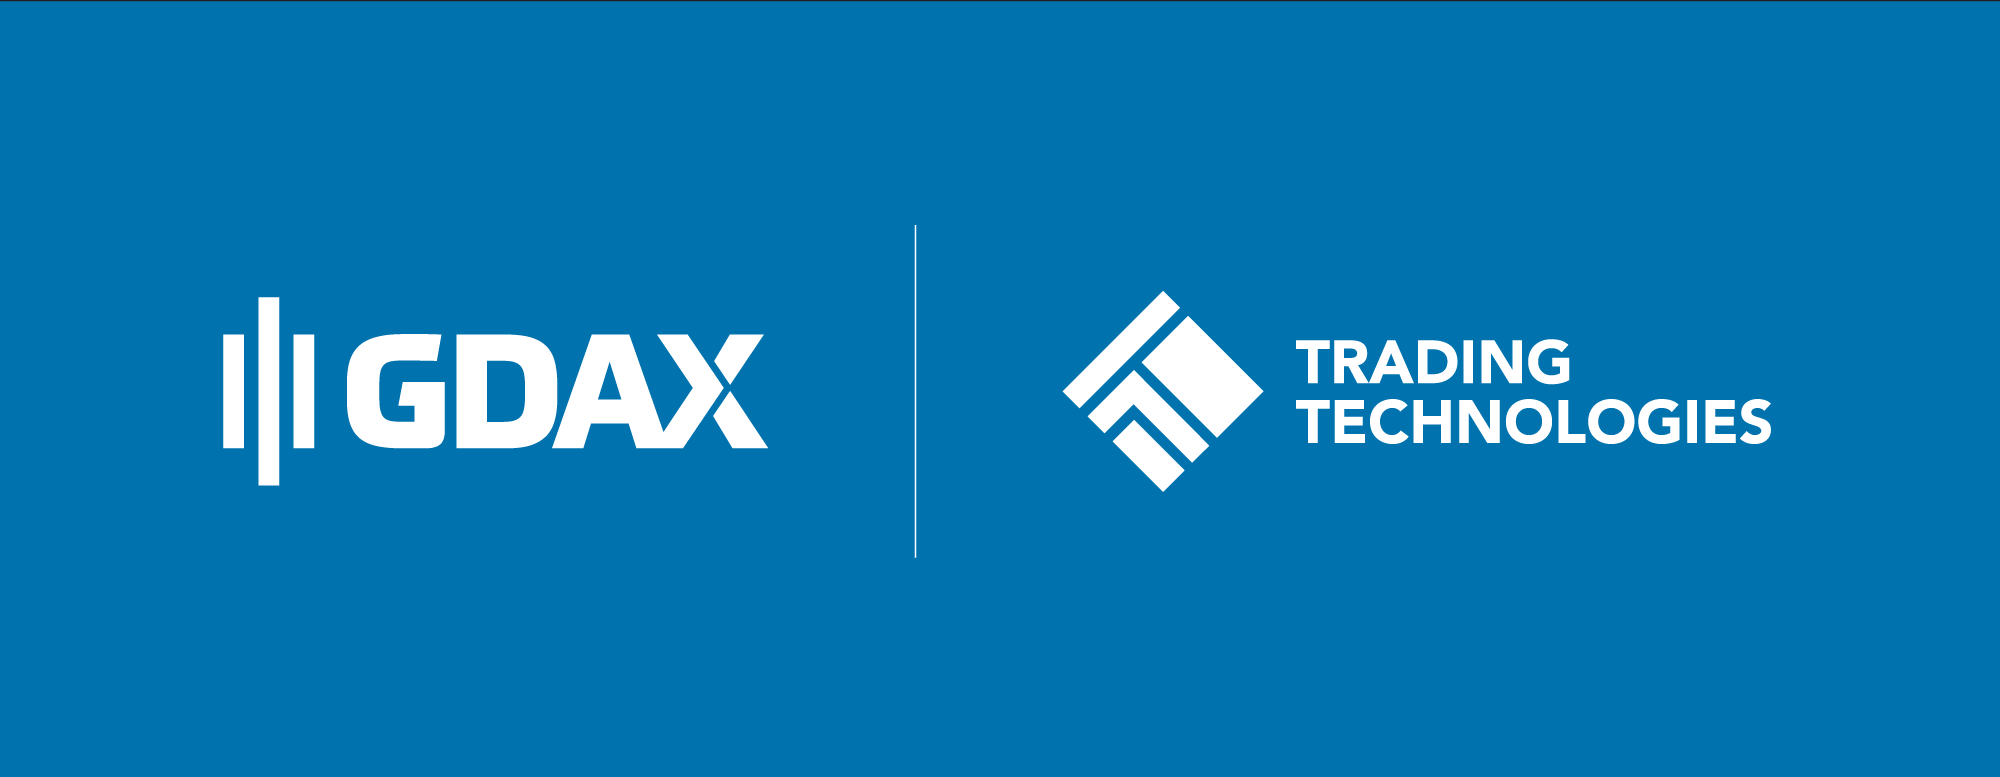 Trade Bitcoin, Bitcoin Cash, Etherum and Litecoin on Coinbase's GDAX using the TT platform